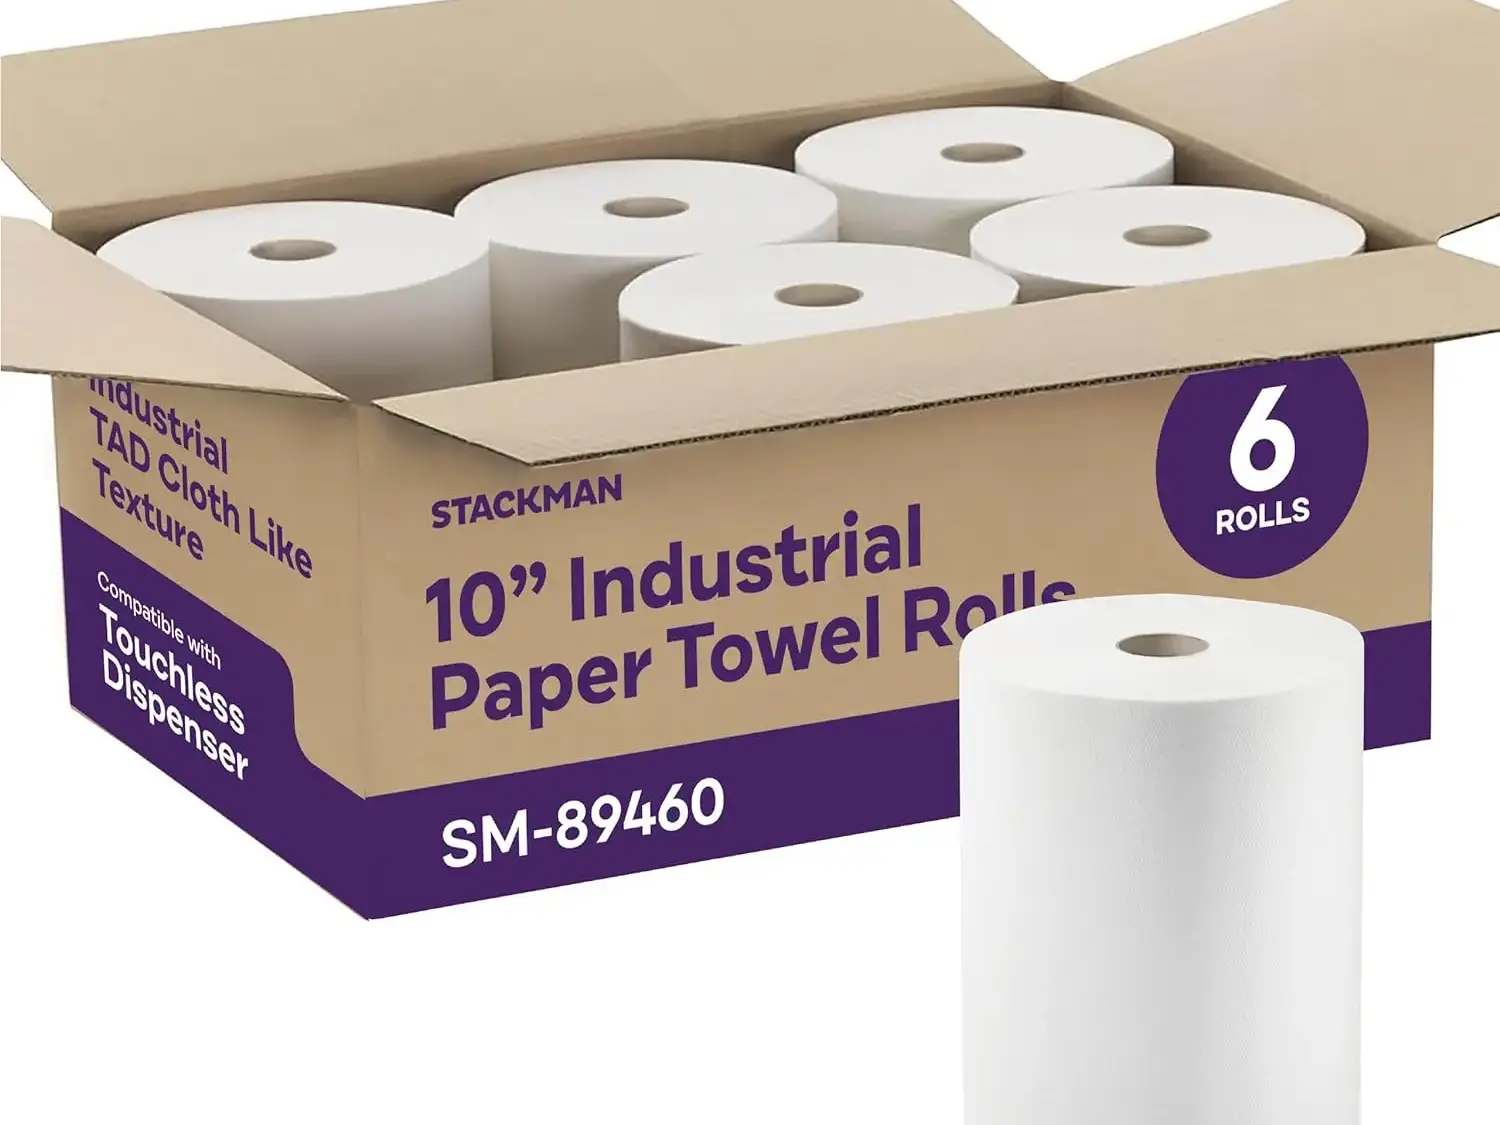 paper towel roll dimensions